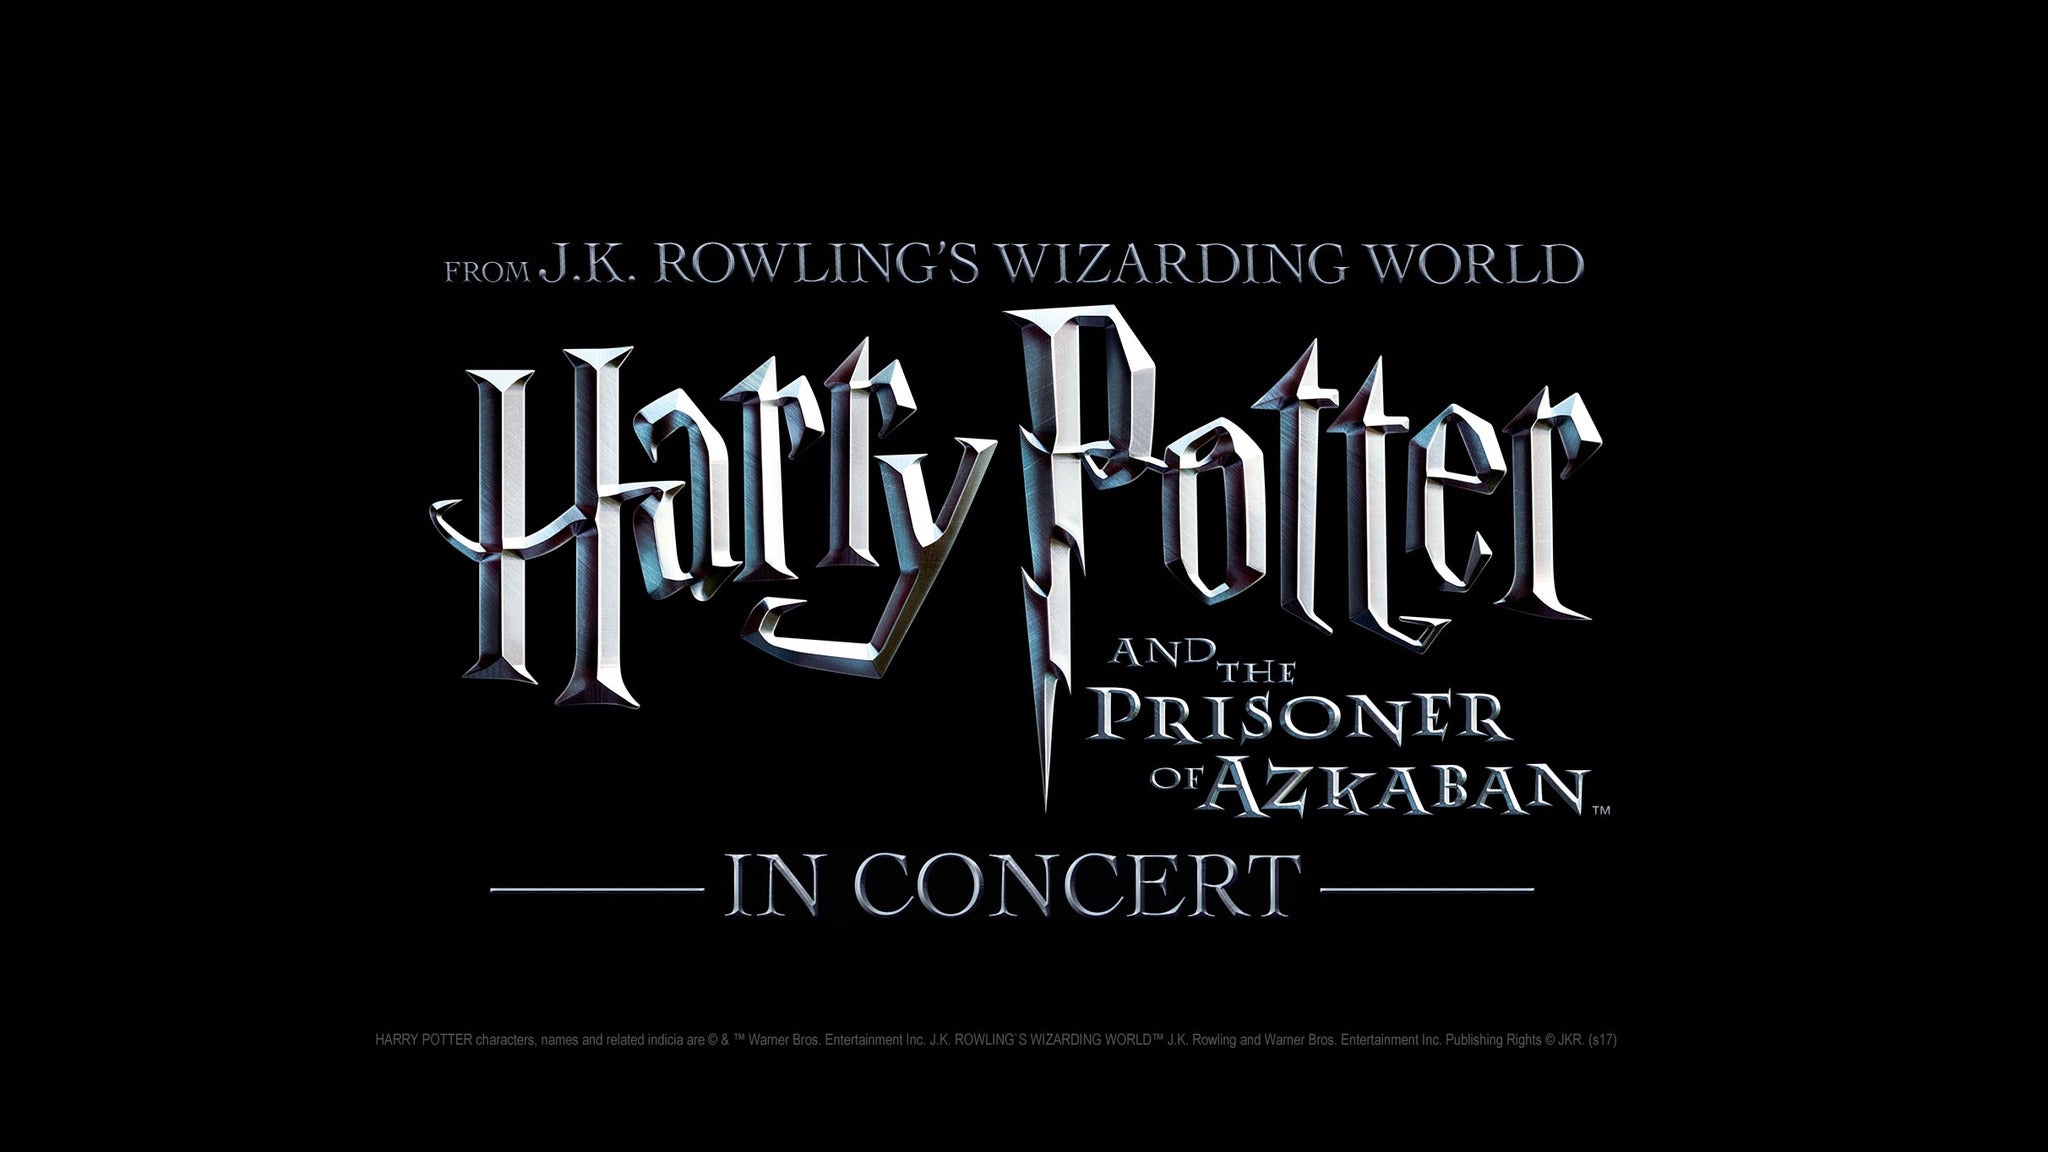 Harry Potter and the Prisoner of Azkaban pre-sale password